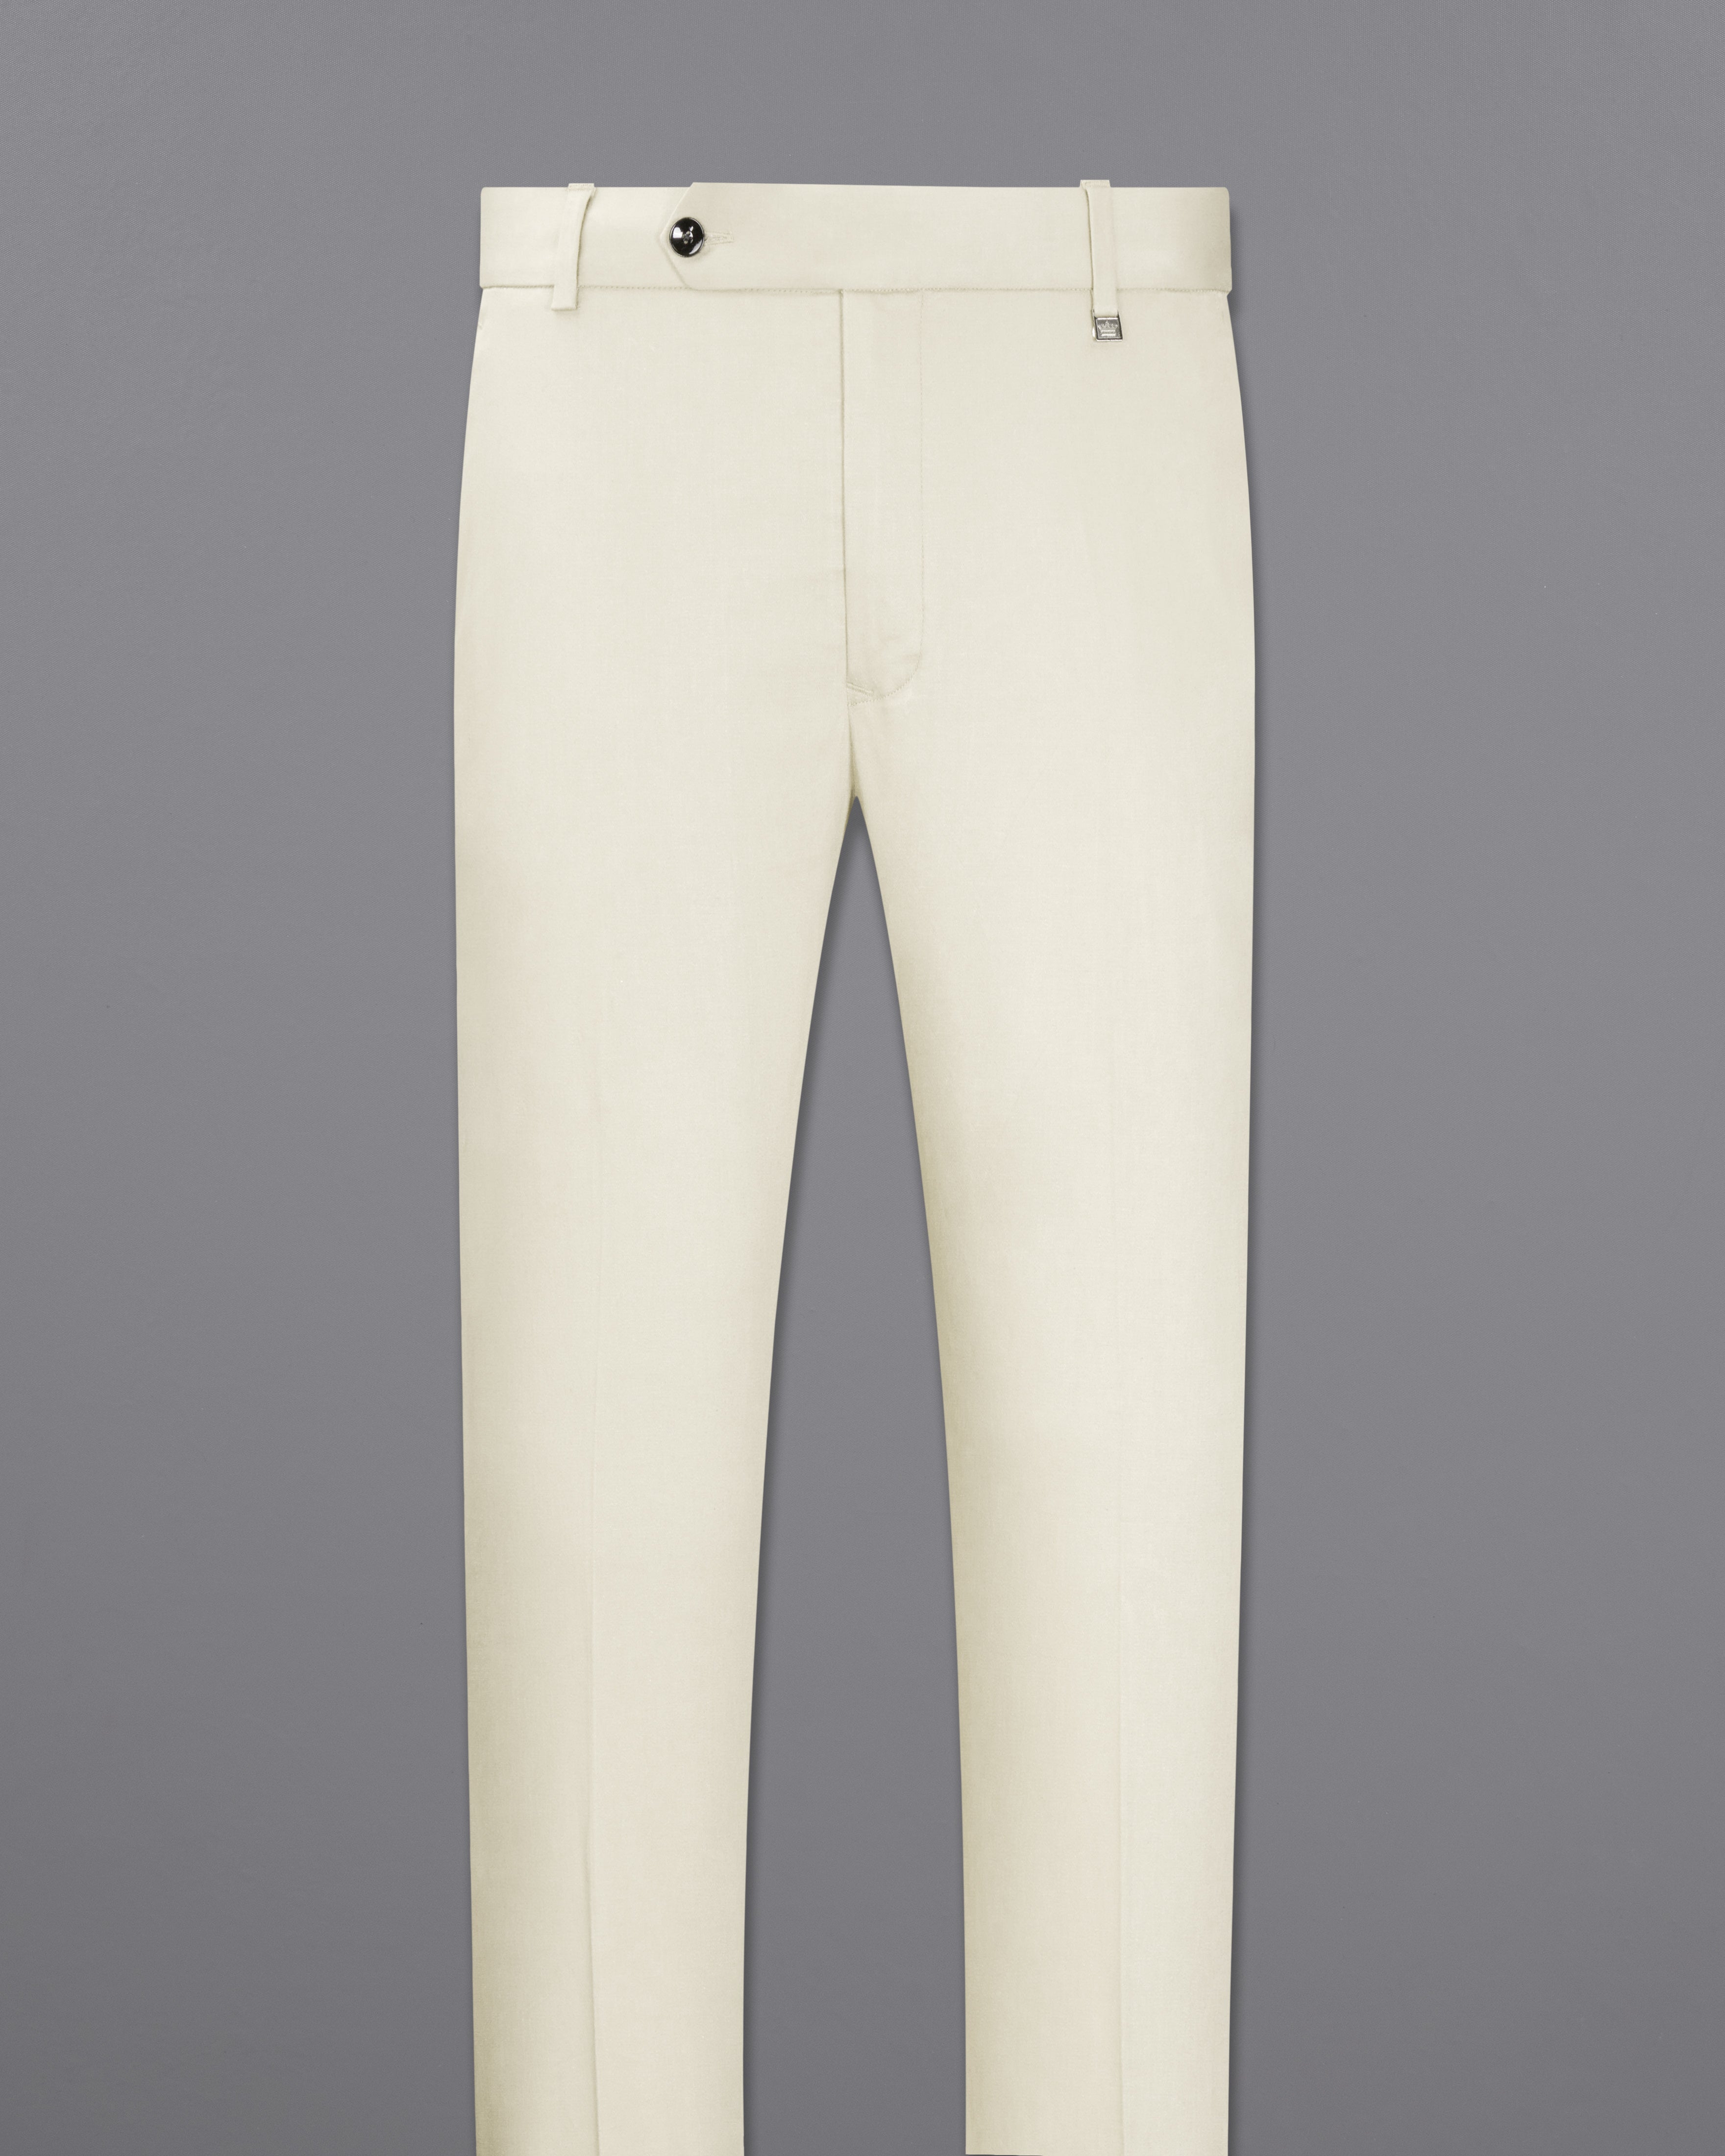 Buy Classic Polo Mens Cotton Solid Slim Fit Cream Color Trouser online